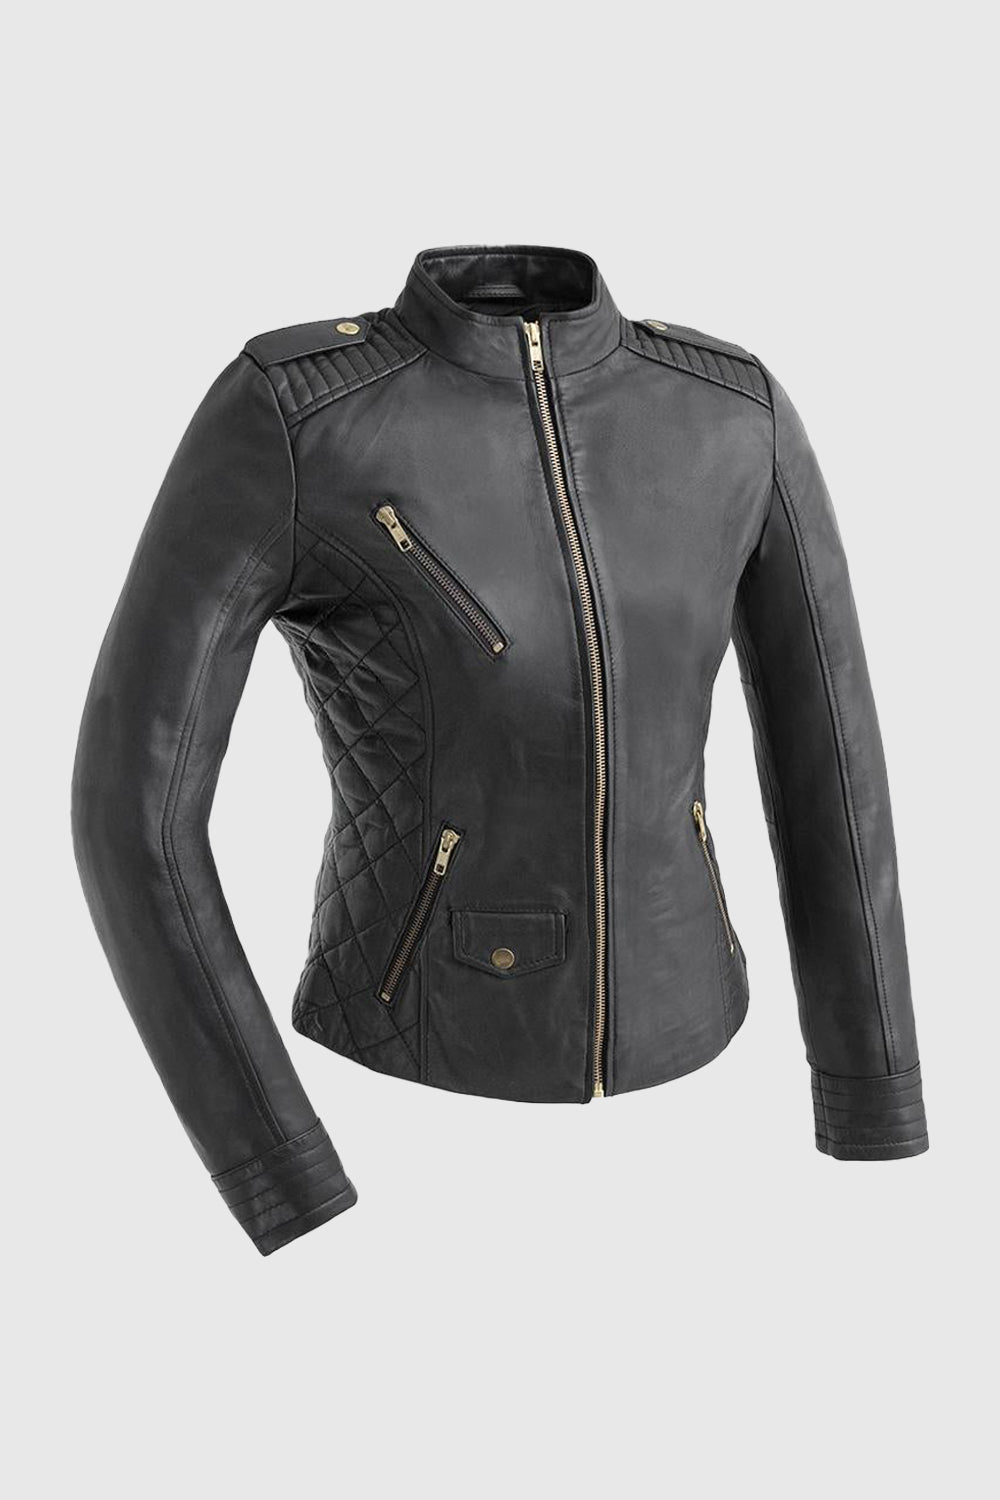 Madelin Womens Fashion Leather Jacket Women's Leather Jacket Whet Blu NYC XS Black 